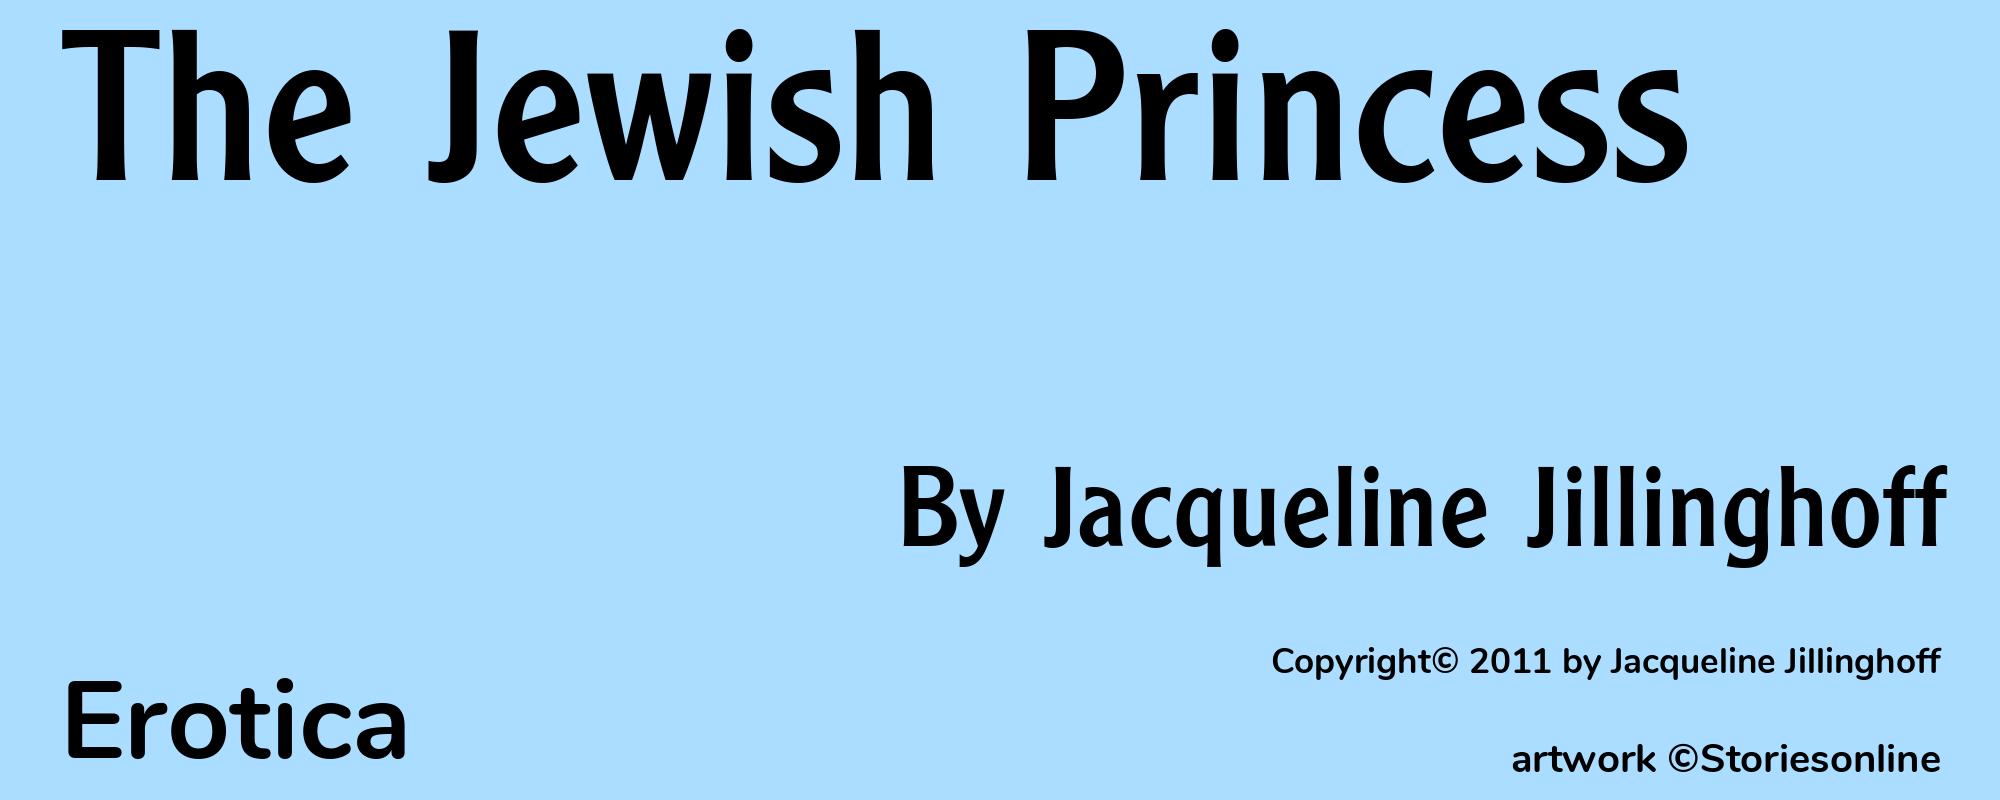 The Jewish Princess - Cover